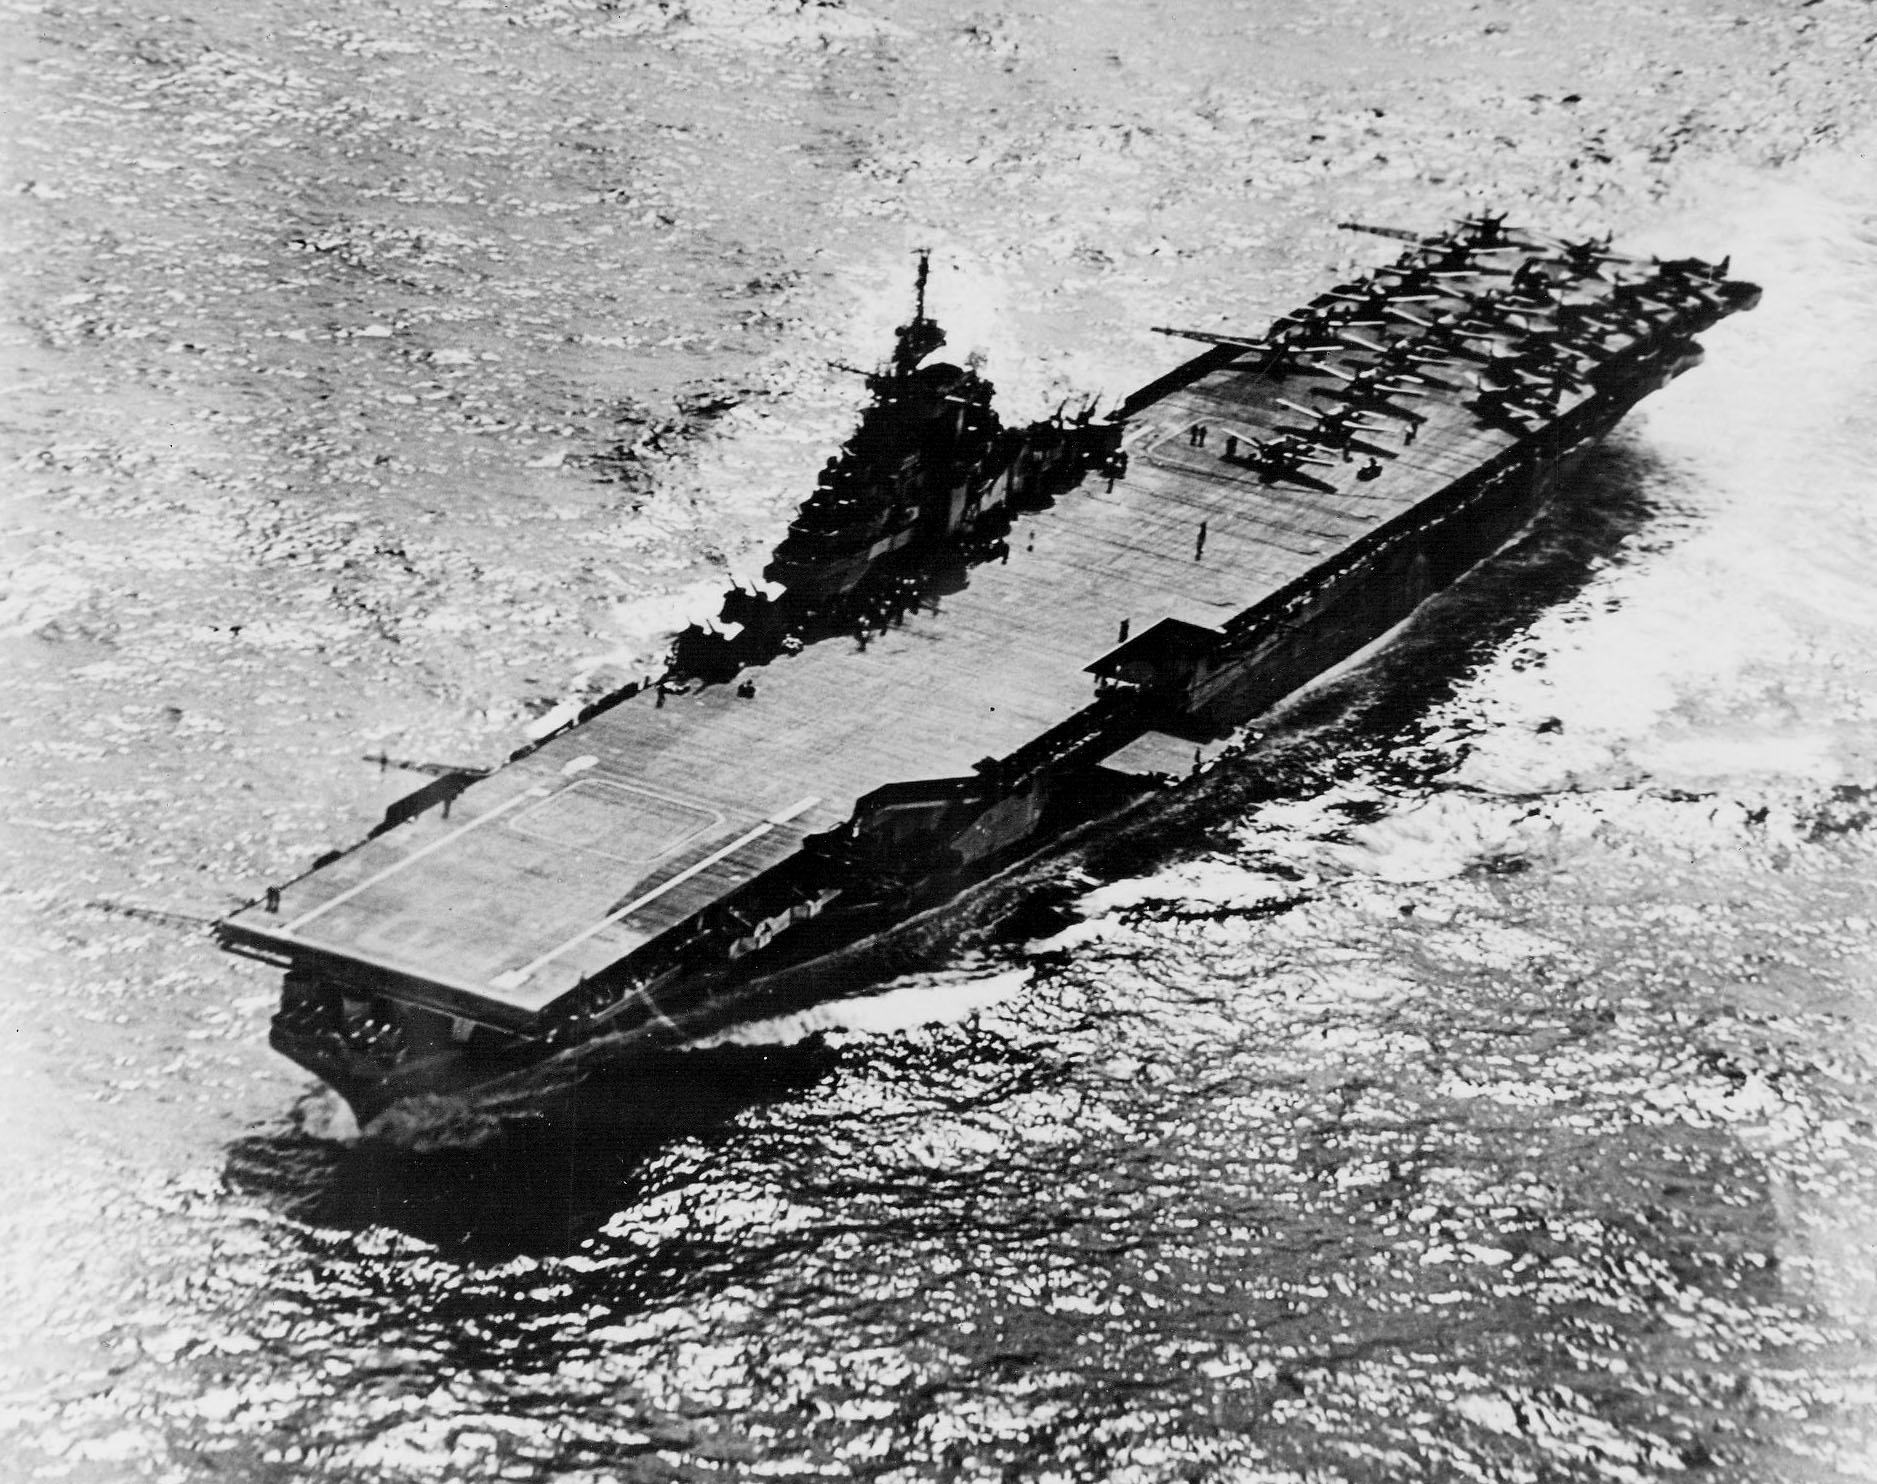 USS Hancock underway in the Philippine Sea, 15 Dec 1944